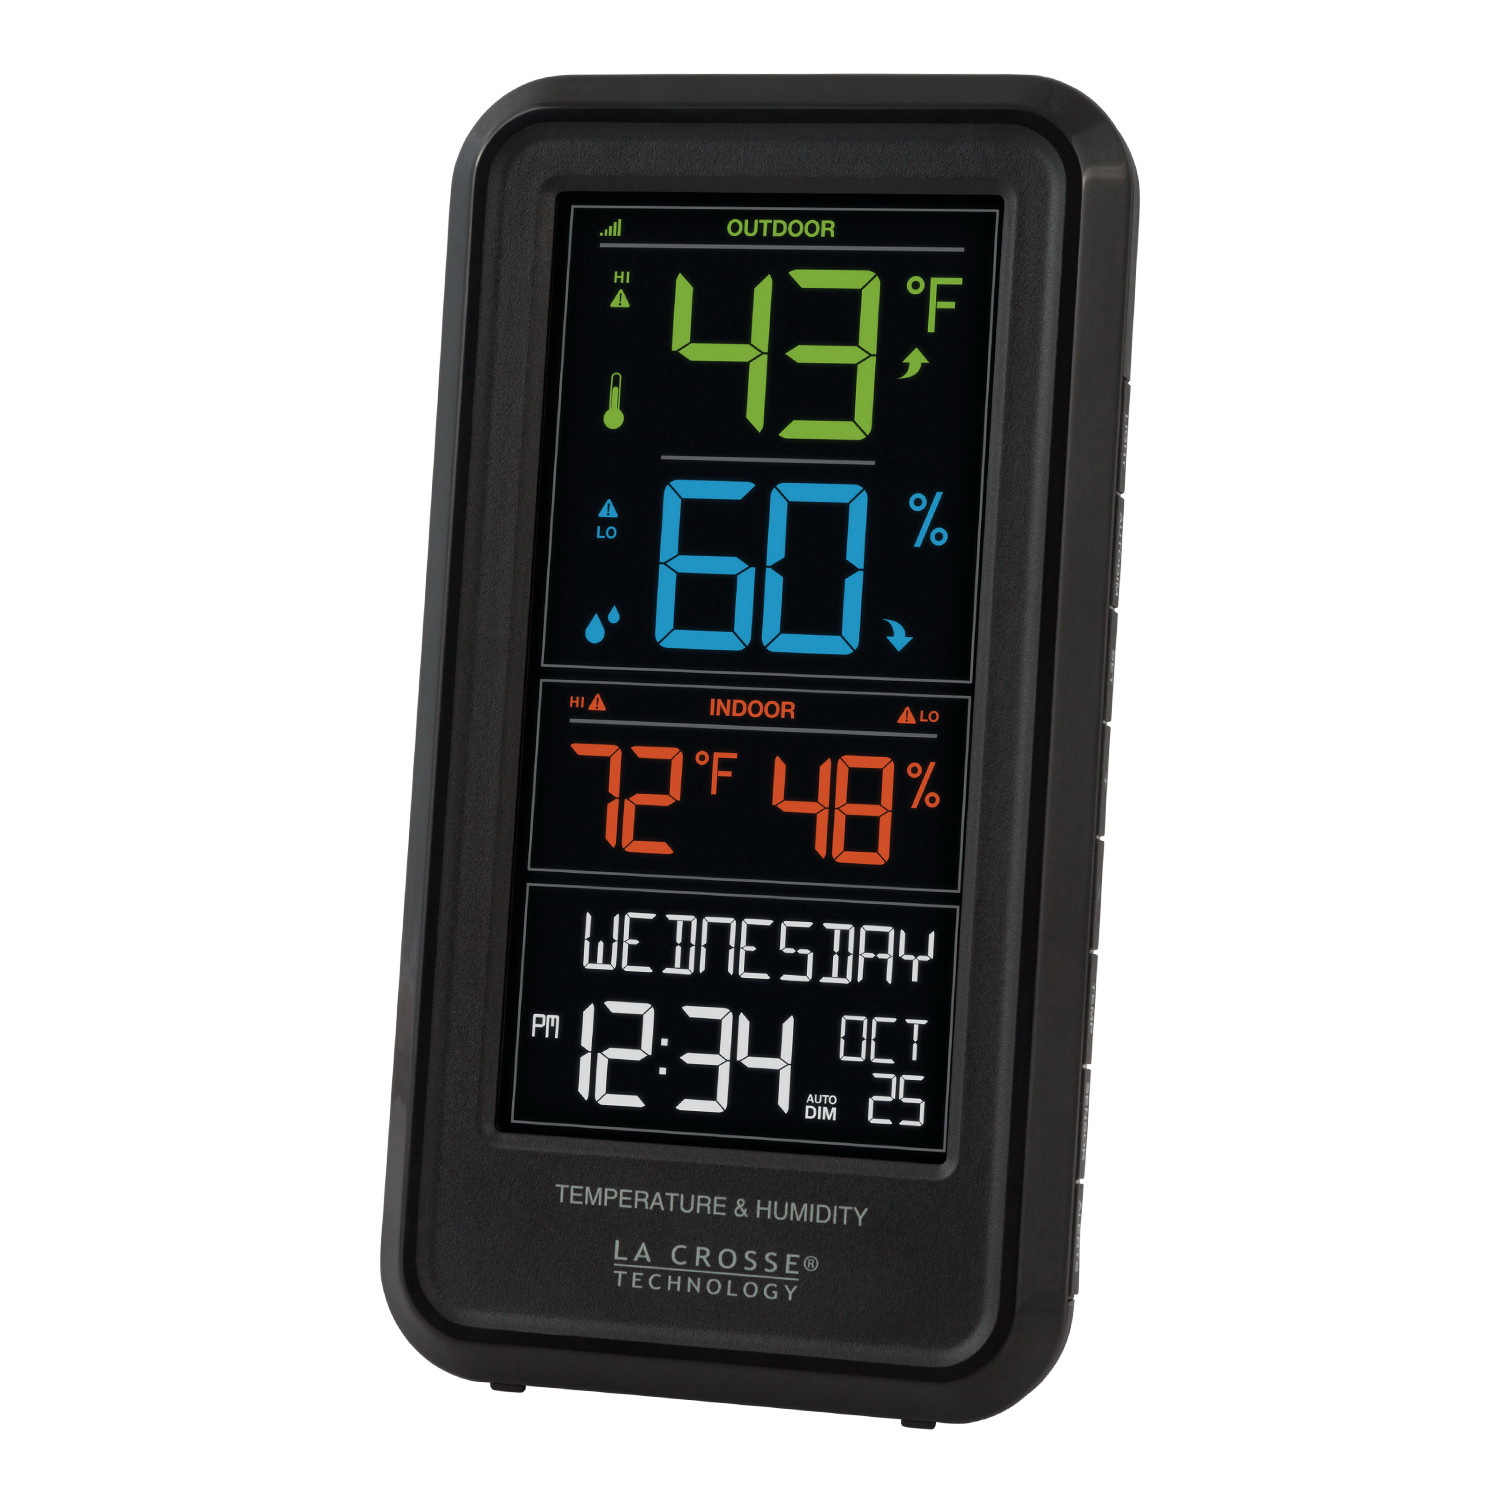 La Crosse S82967 Weather Station, Battery, 32 to 99 deg F Indoor,-40 to 140 deg F Outdoor, 10 to 99 % Humidity Range - 2